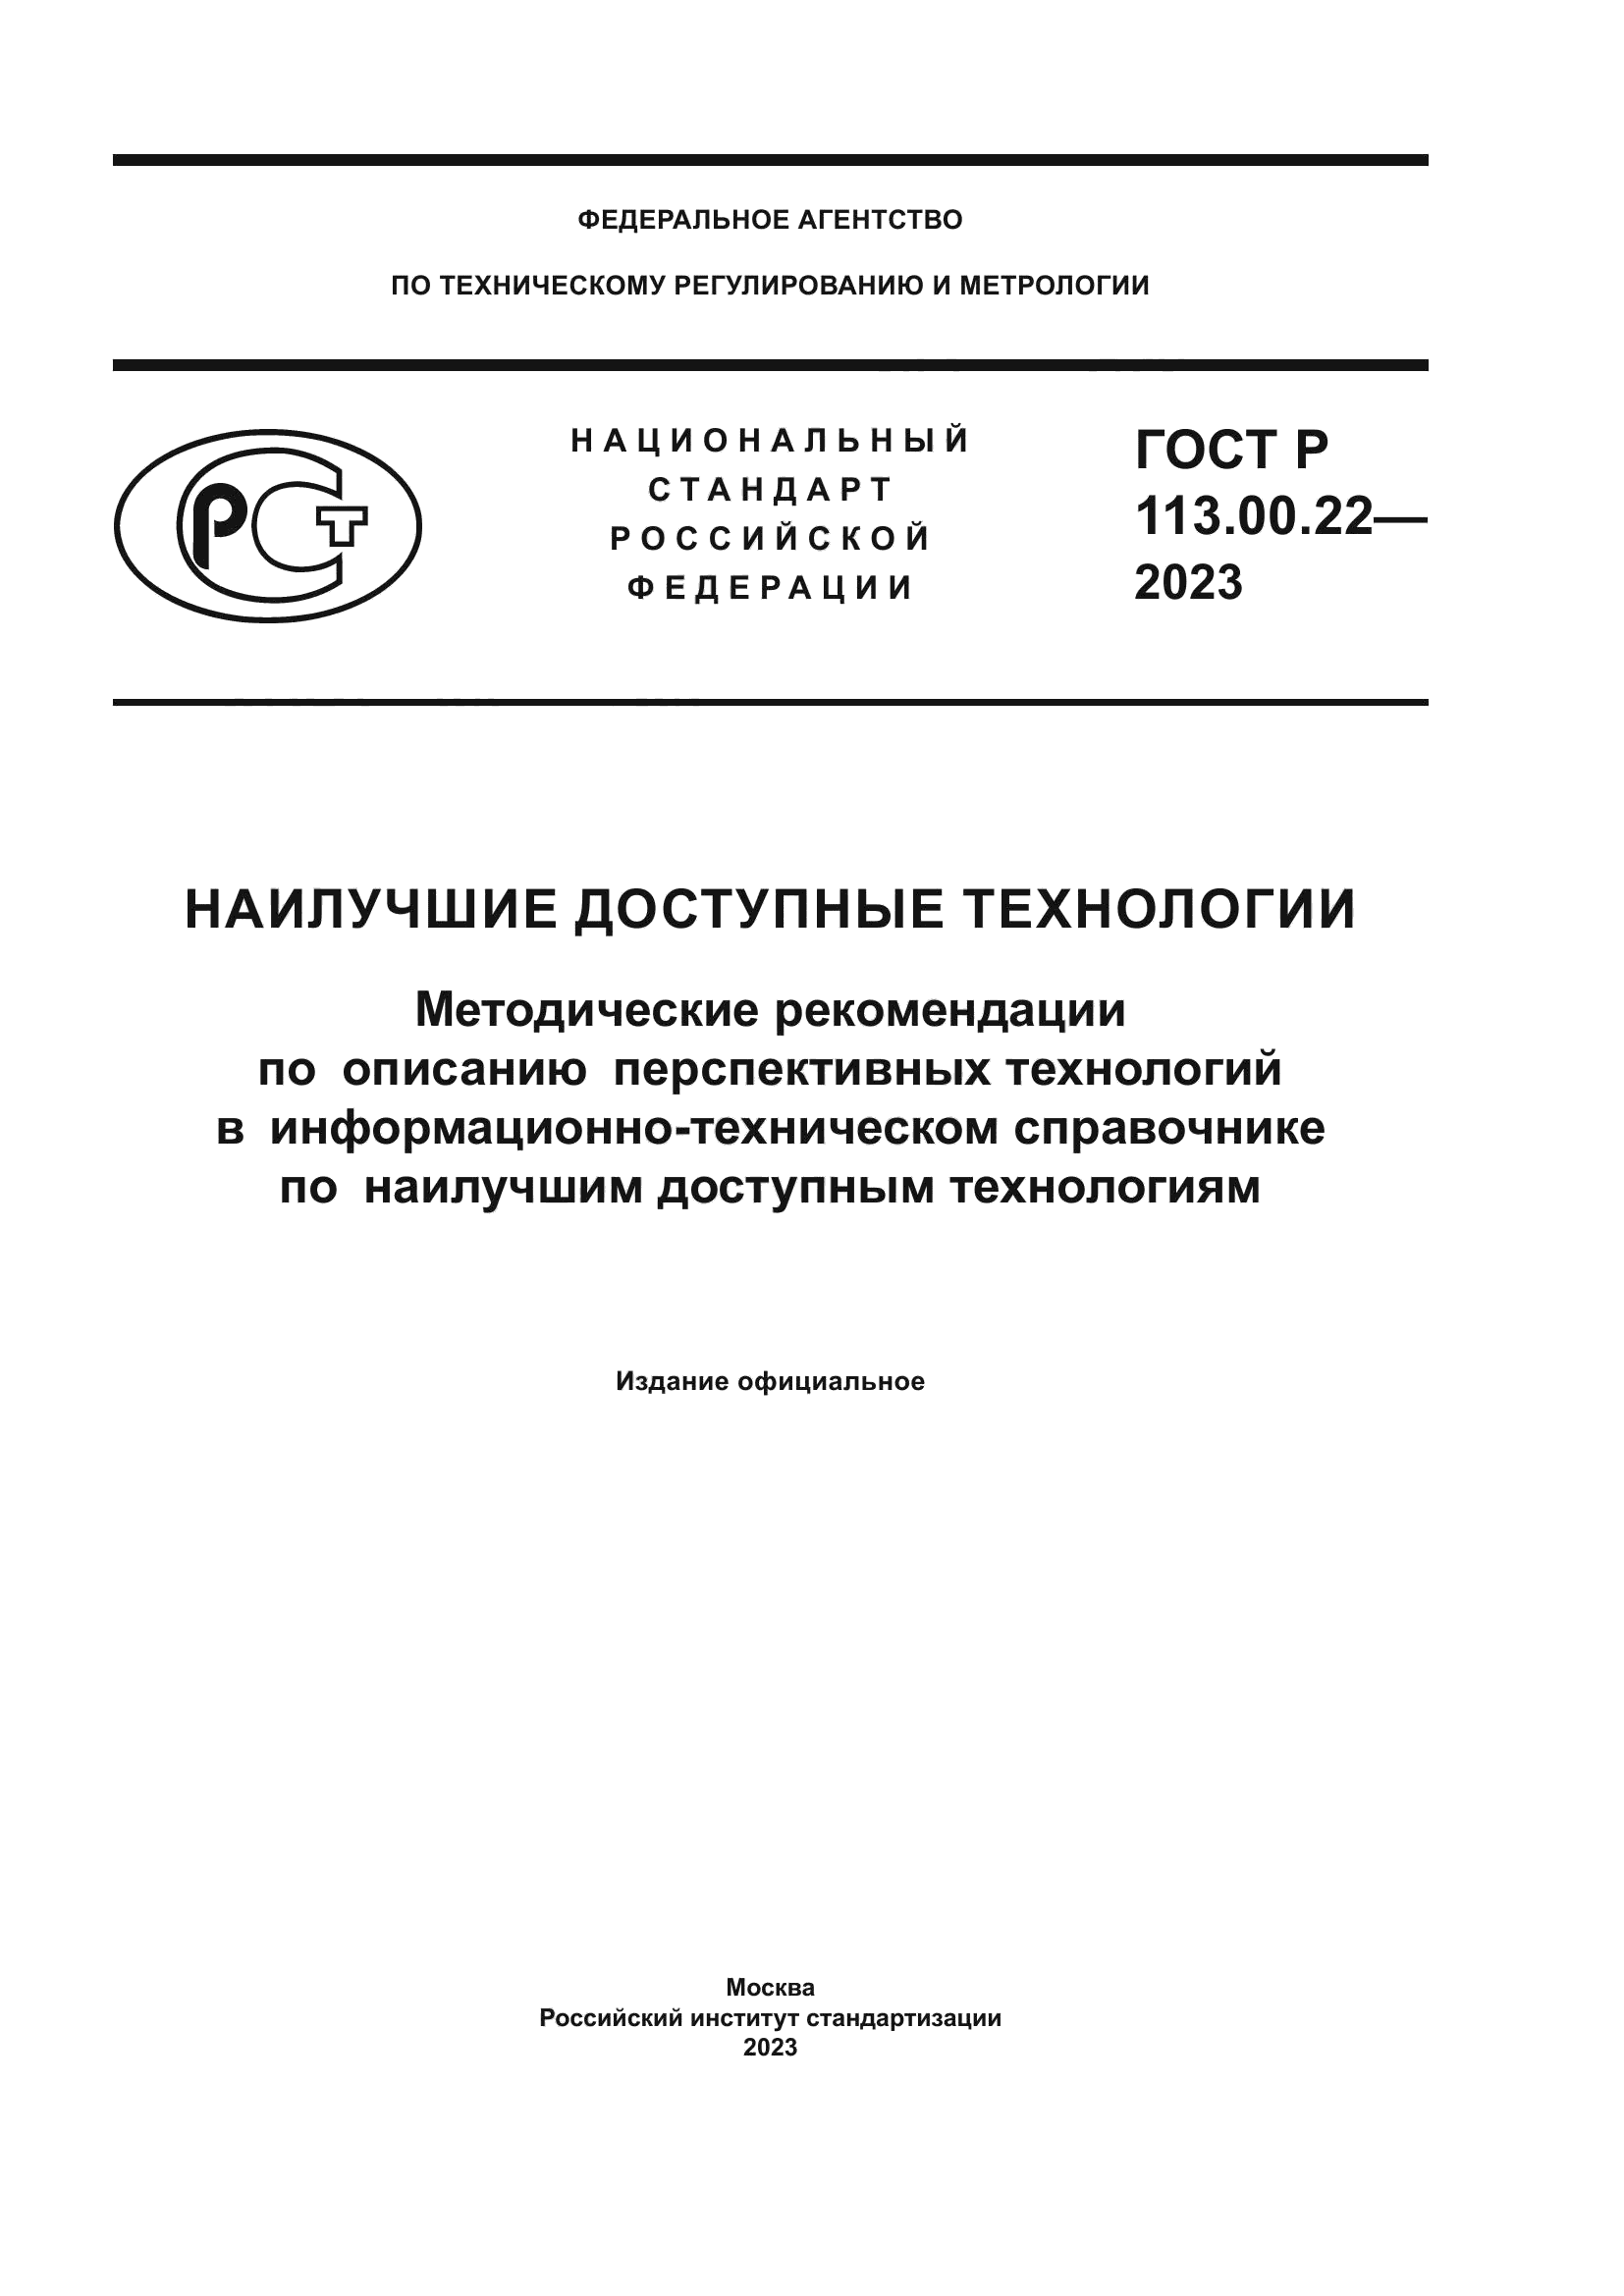 ГОСТ Р 113.00.22-2023